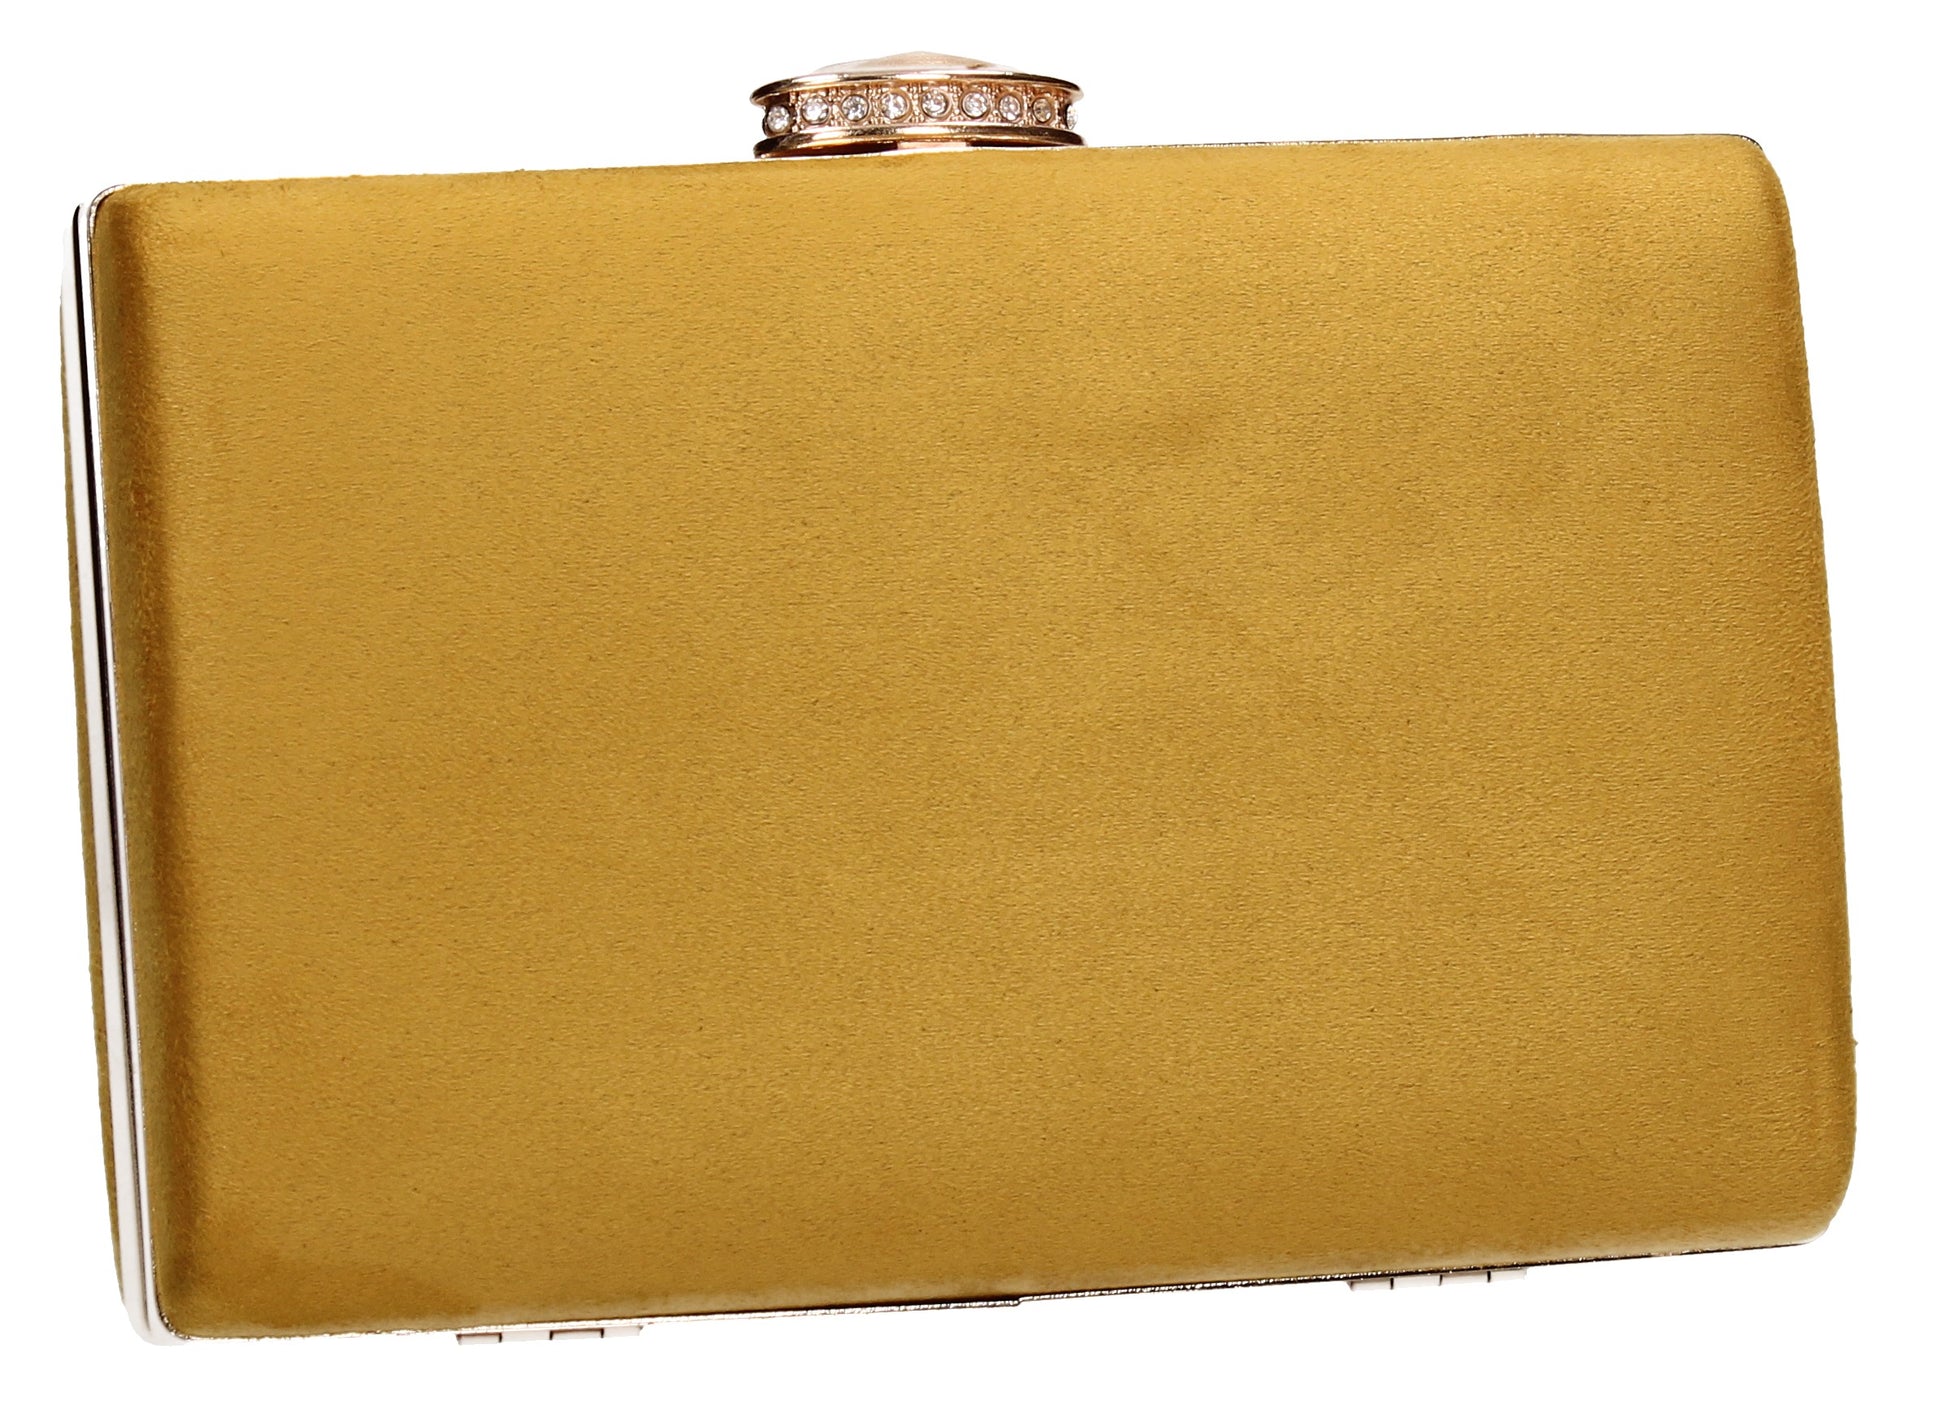 SWANKYSWANS Surrey Clutch Bag Yellow Cute Cheap Clutch Bag For Weddings School and Work